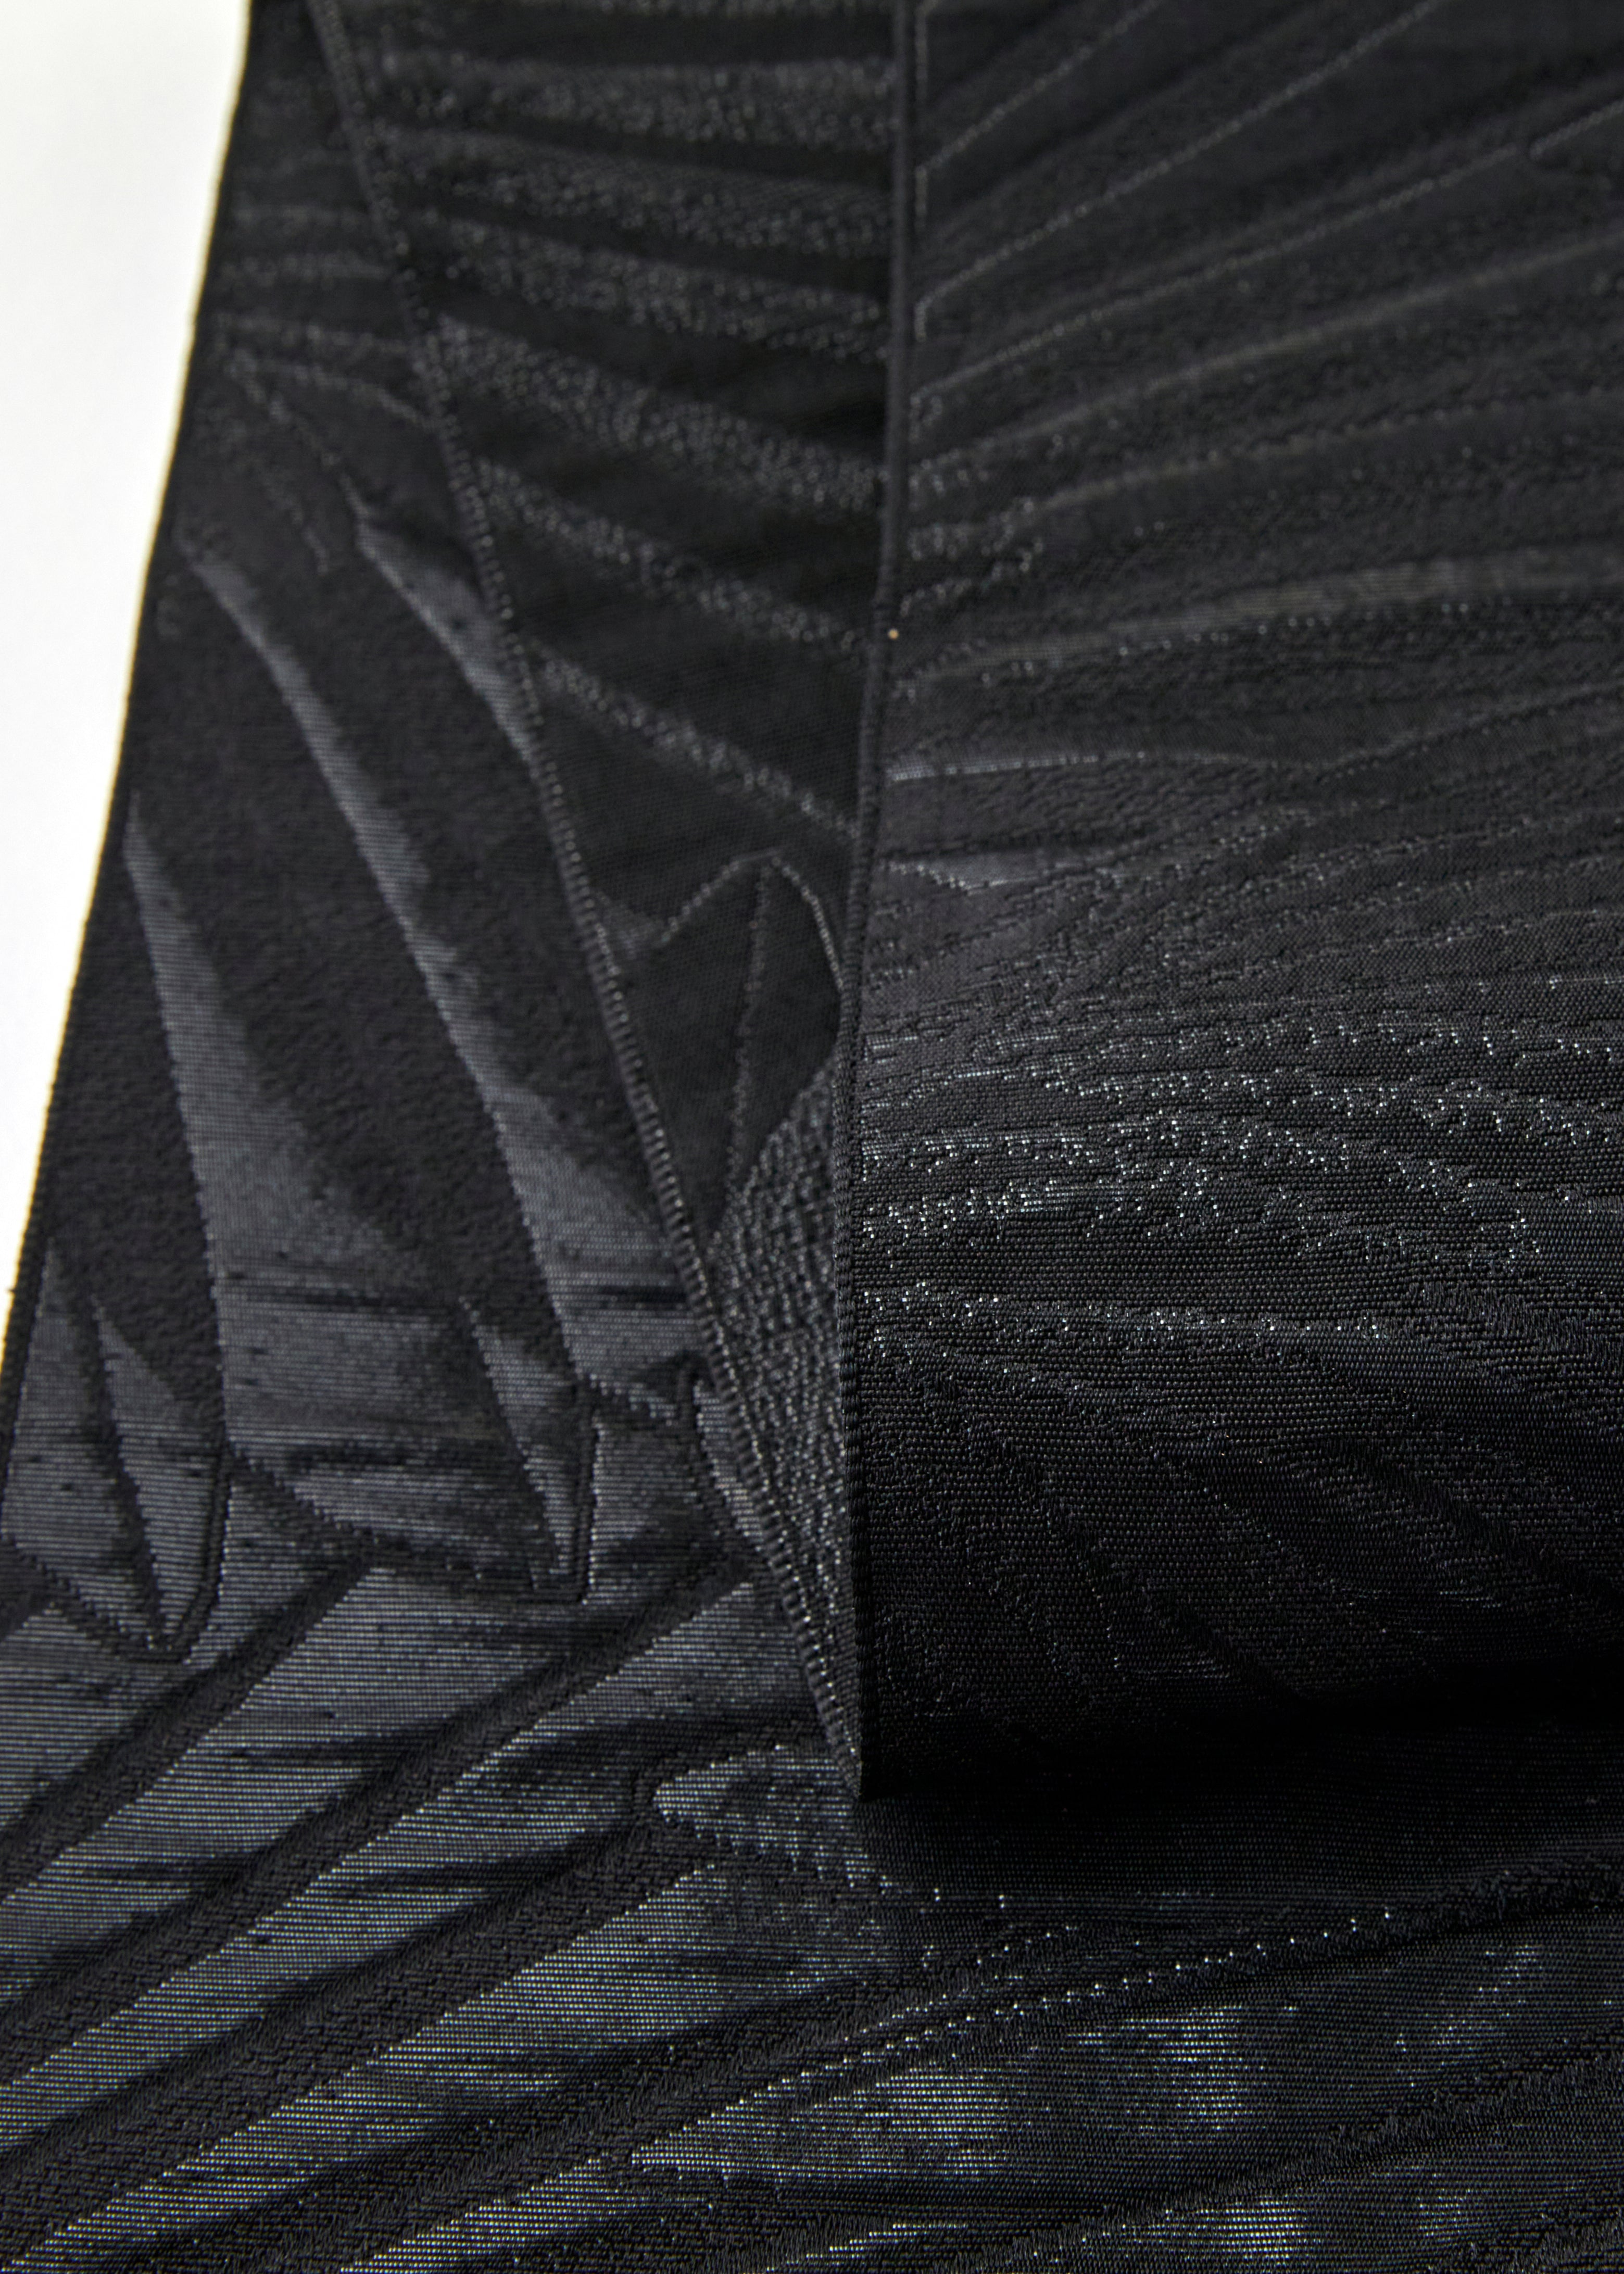 Heko-obi "Wet Crow's Feather" Black: Hakata-ori | Pure Silk